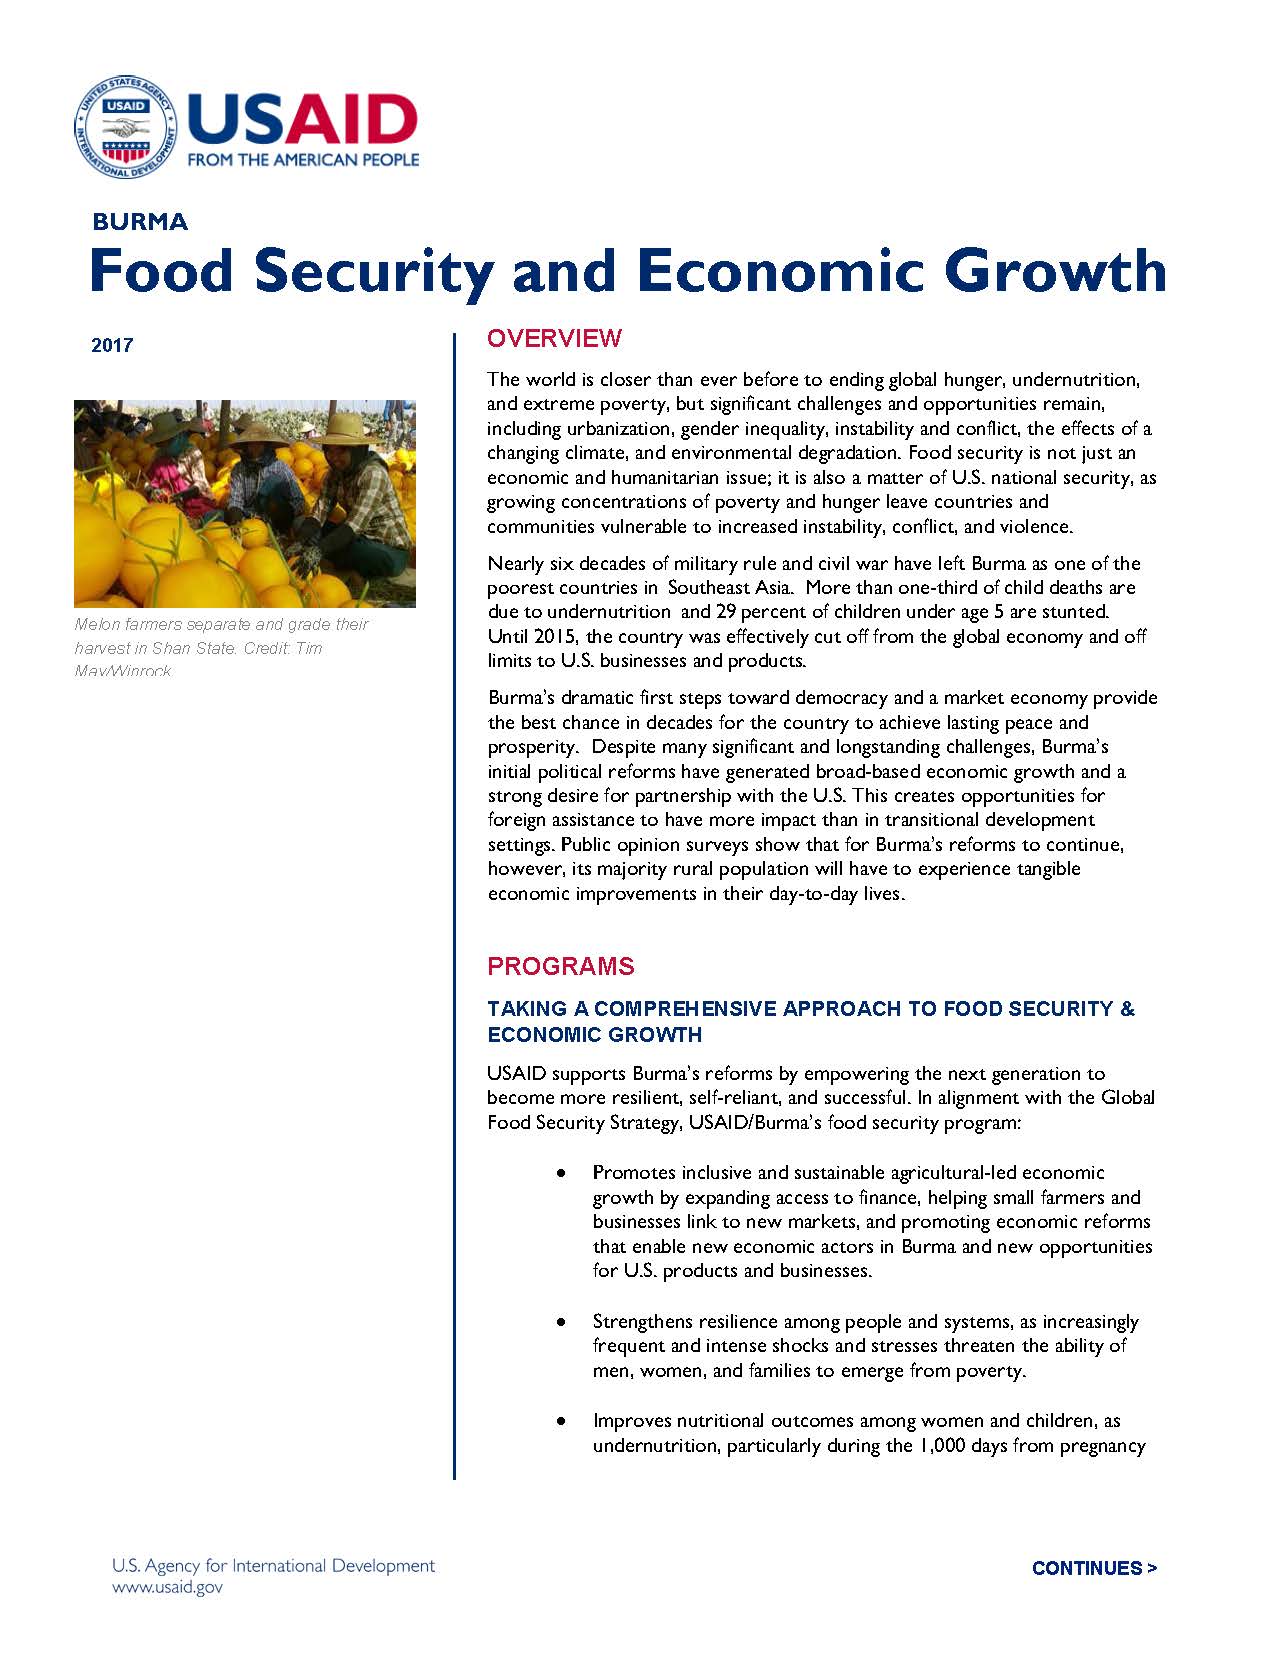 Burma Food Security and Economic Growth Fact Sheet 2017